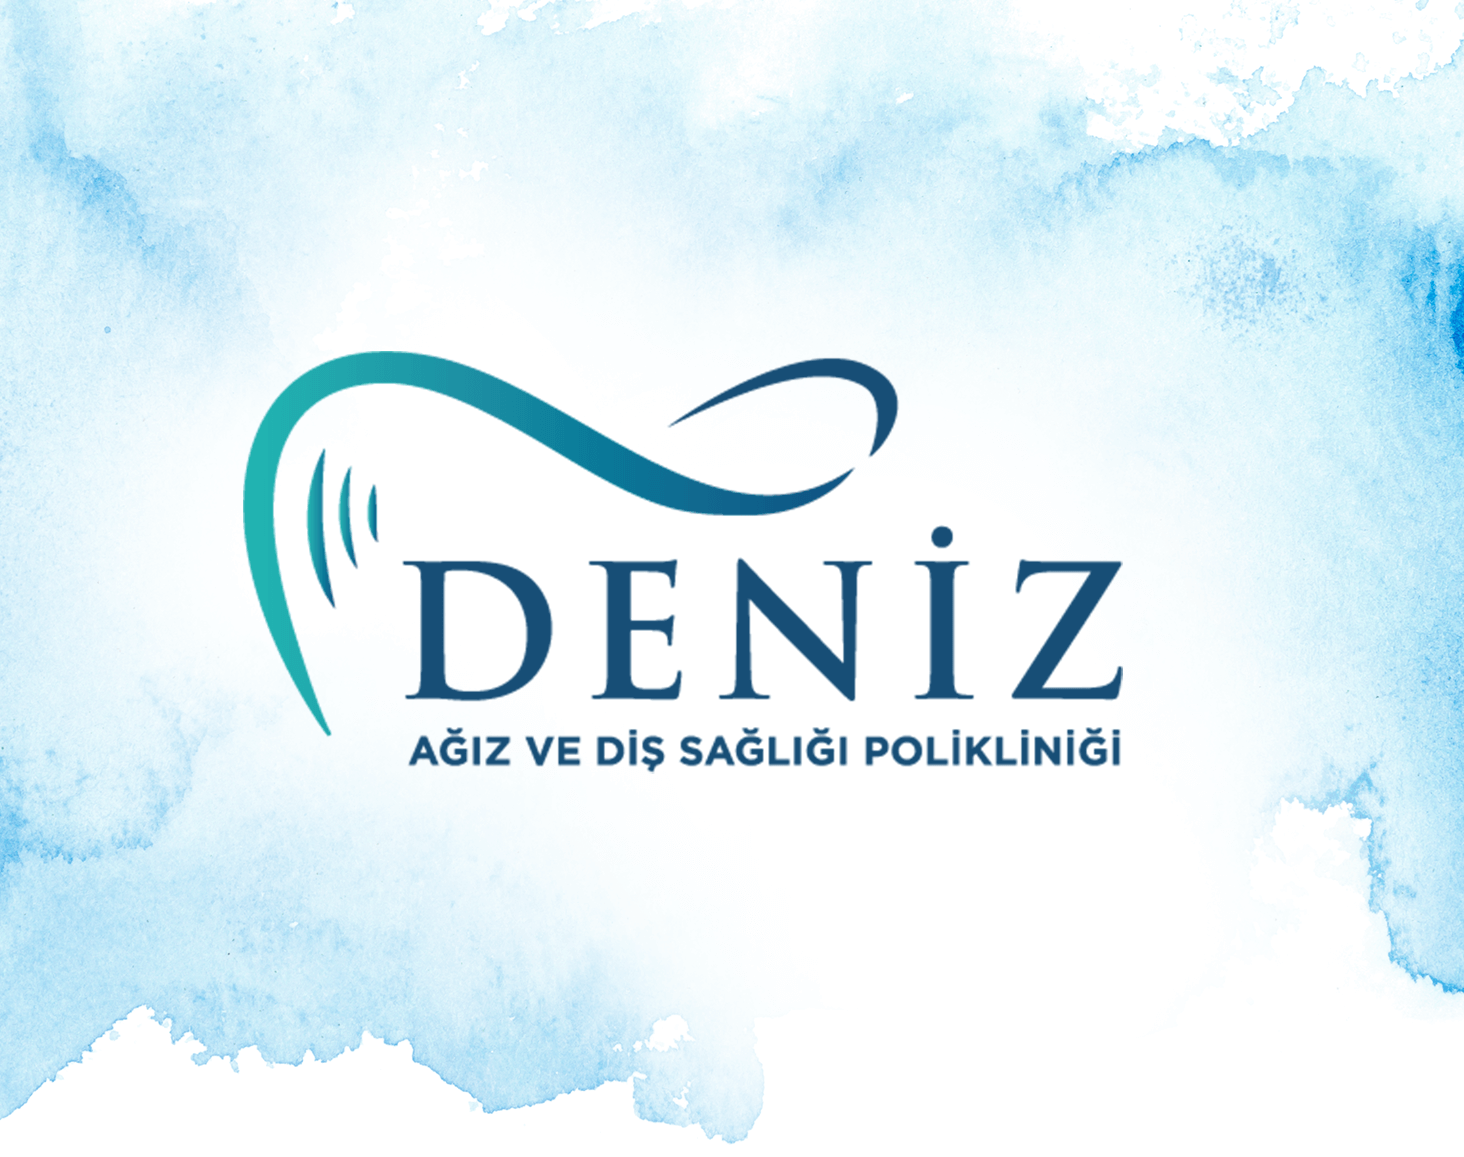 Deniz Oral and Dental Health Polyclinic